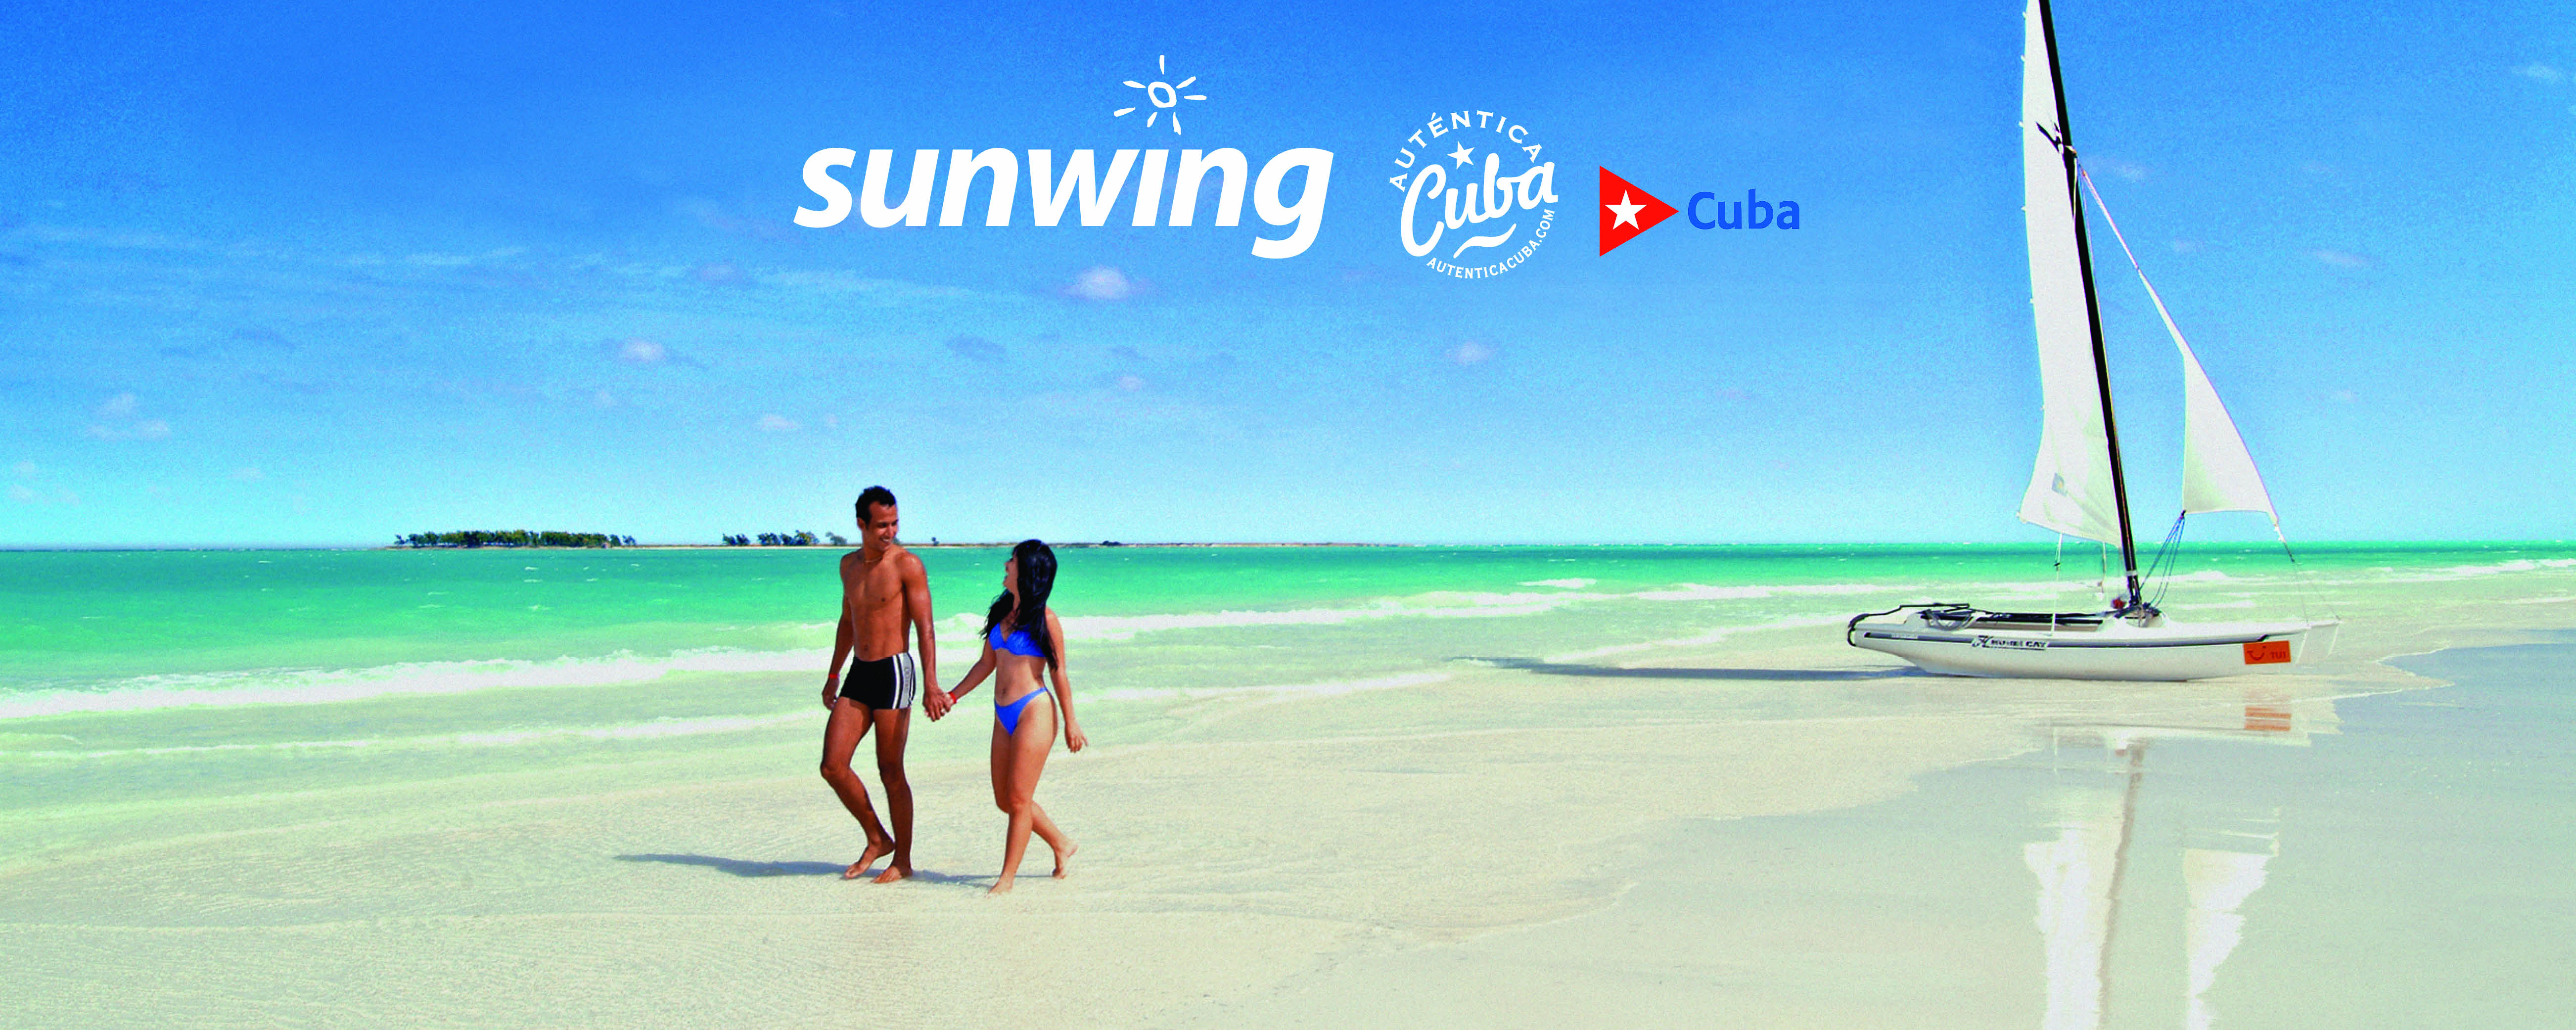 sunwing cuba travel advisory